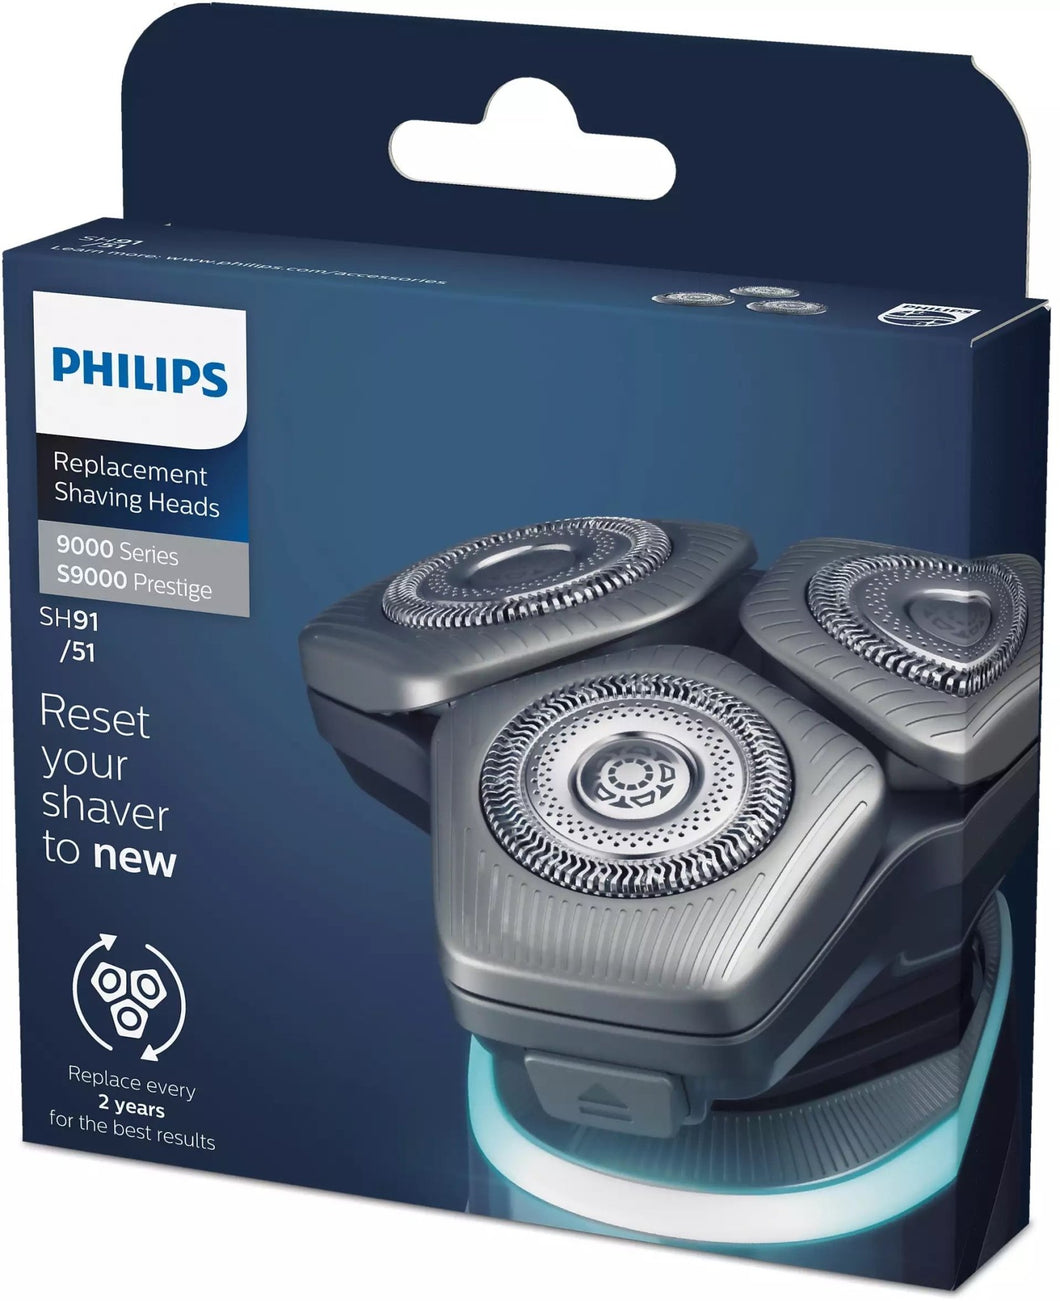 Philips Replacement shaving heads SH91/51 - Get a Cut NZ